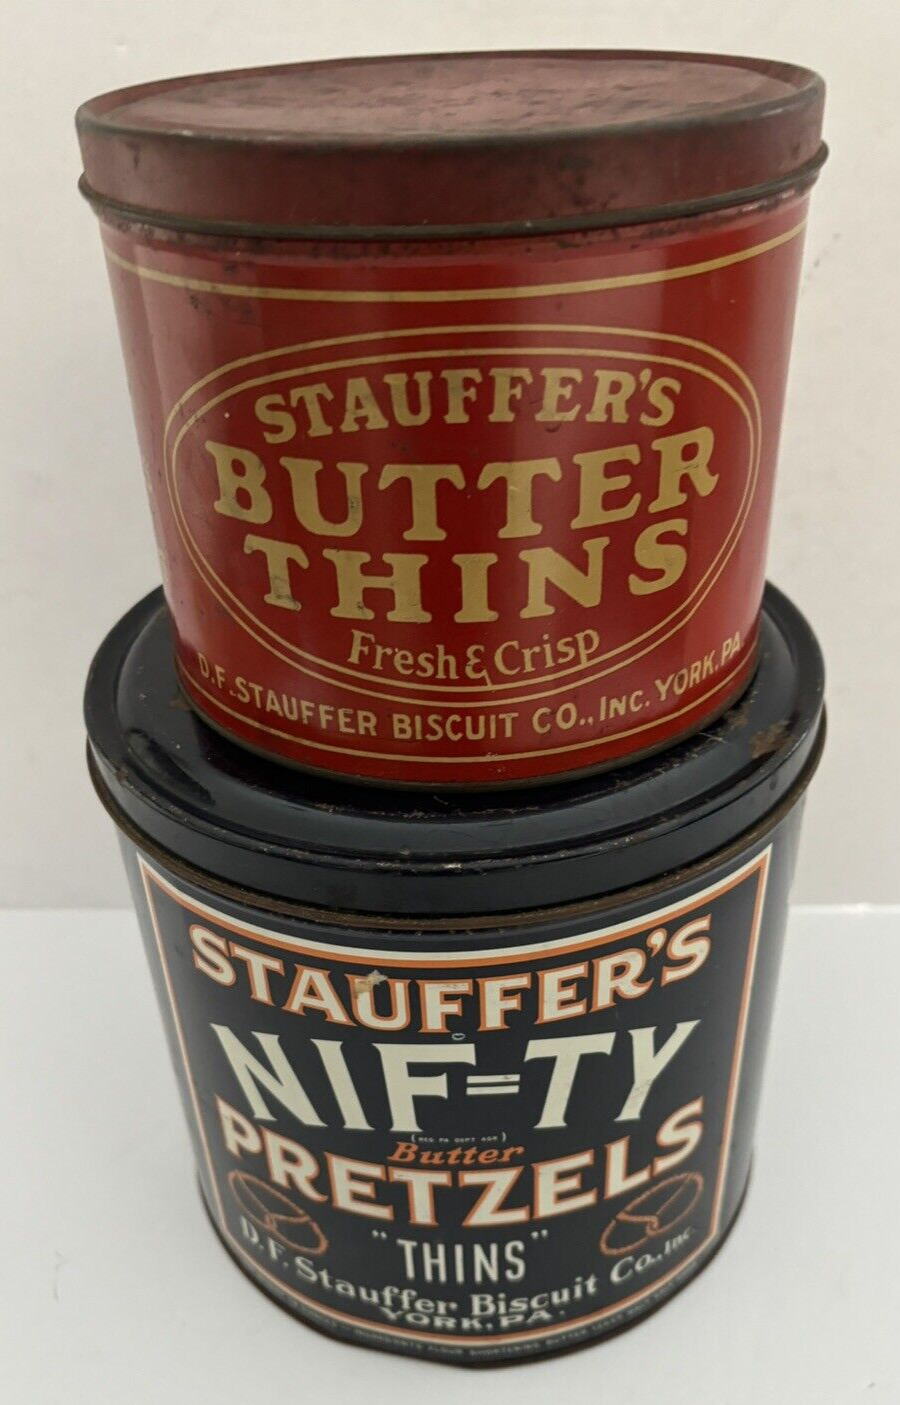 Lot of 2 Vintage Stauffers Pretzel Tins (NIF=TY Butter & Butter Thin)